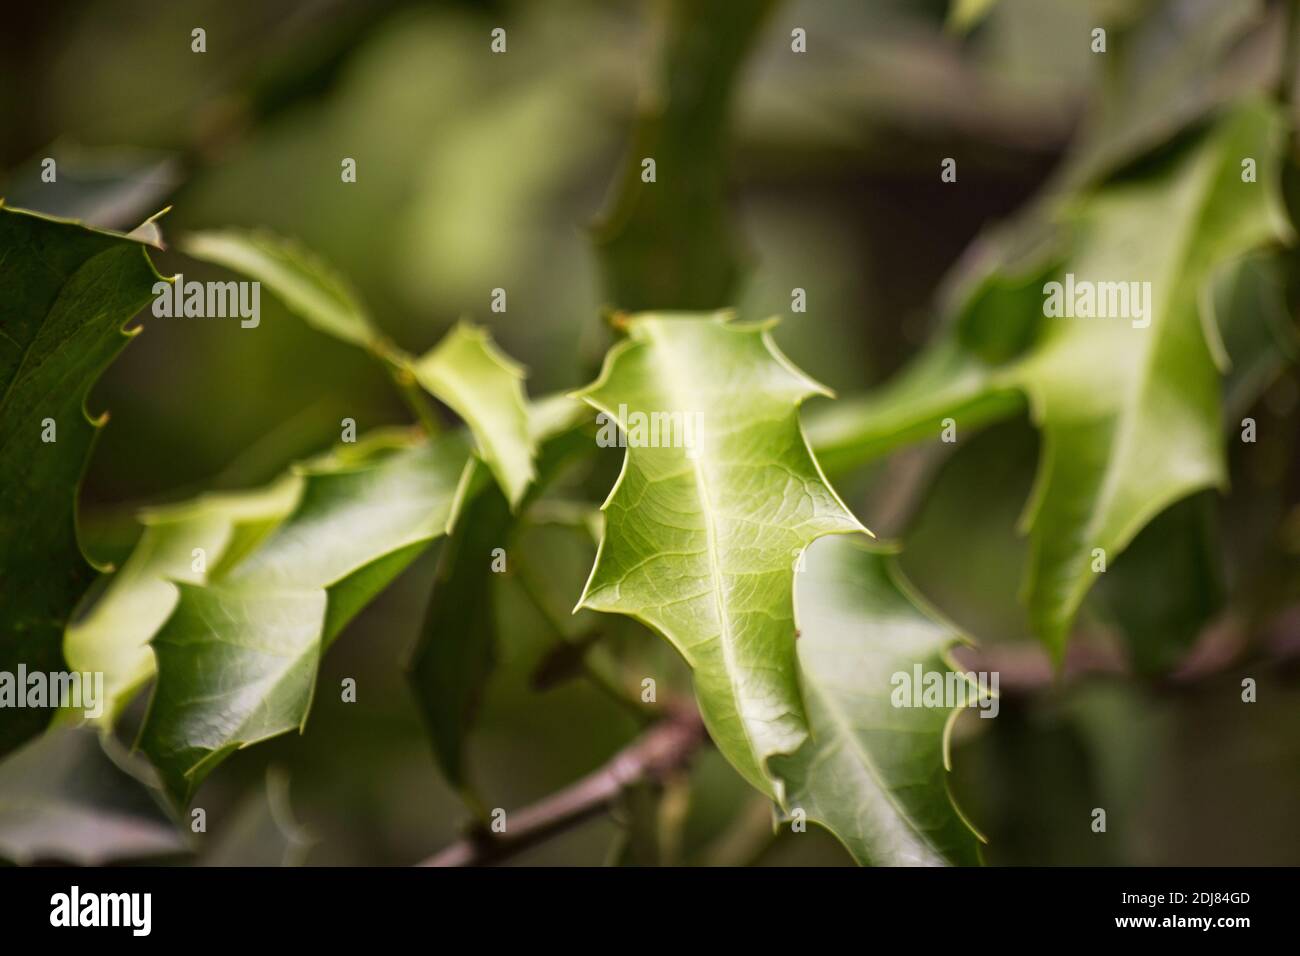 Medicinal plant 'Espinheira santa' leaves Stock Photo